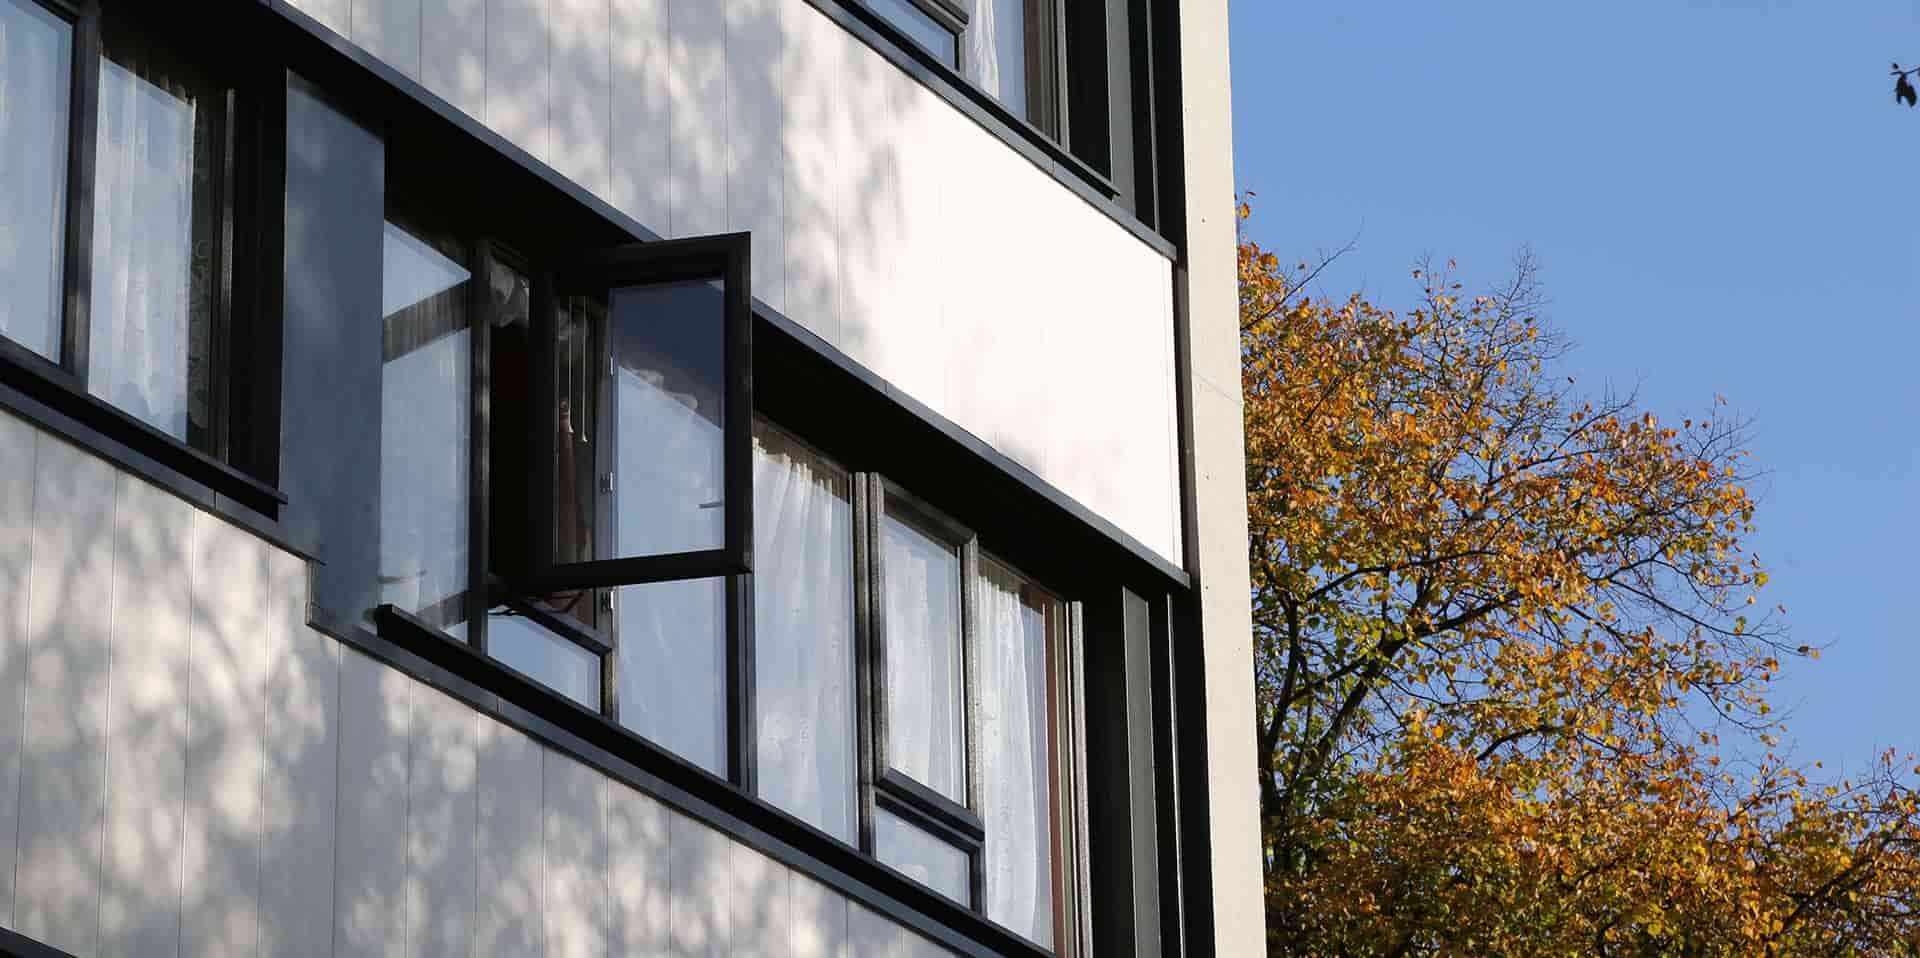 PVCu casement windows for schools